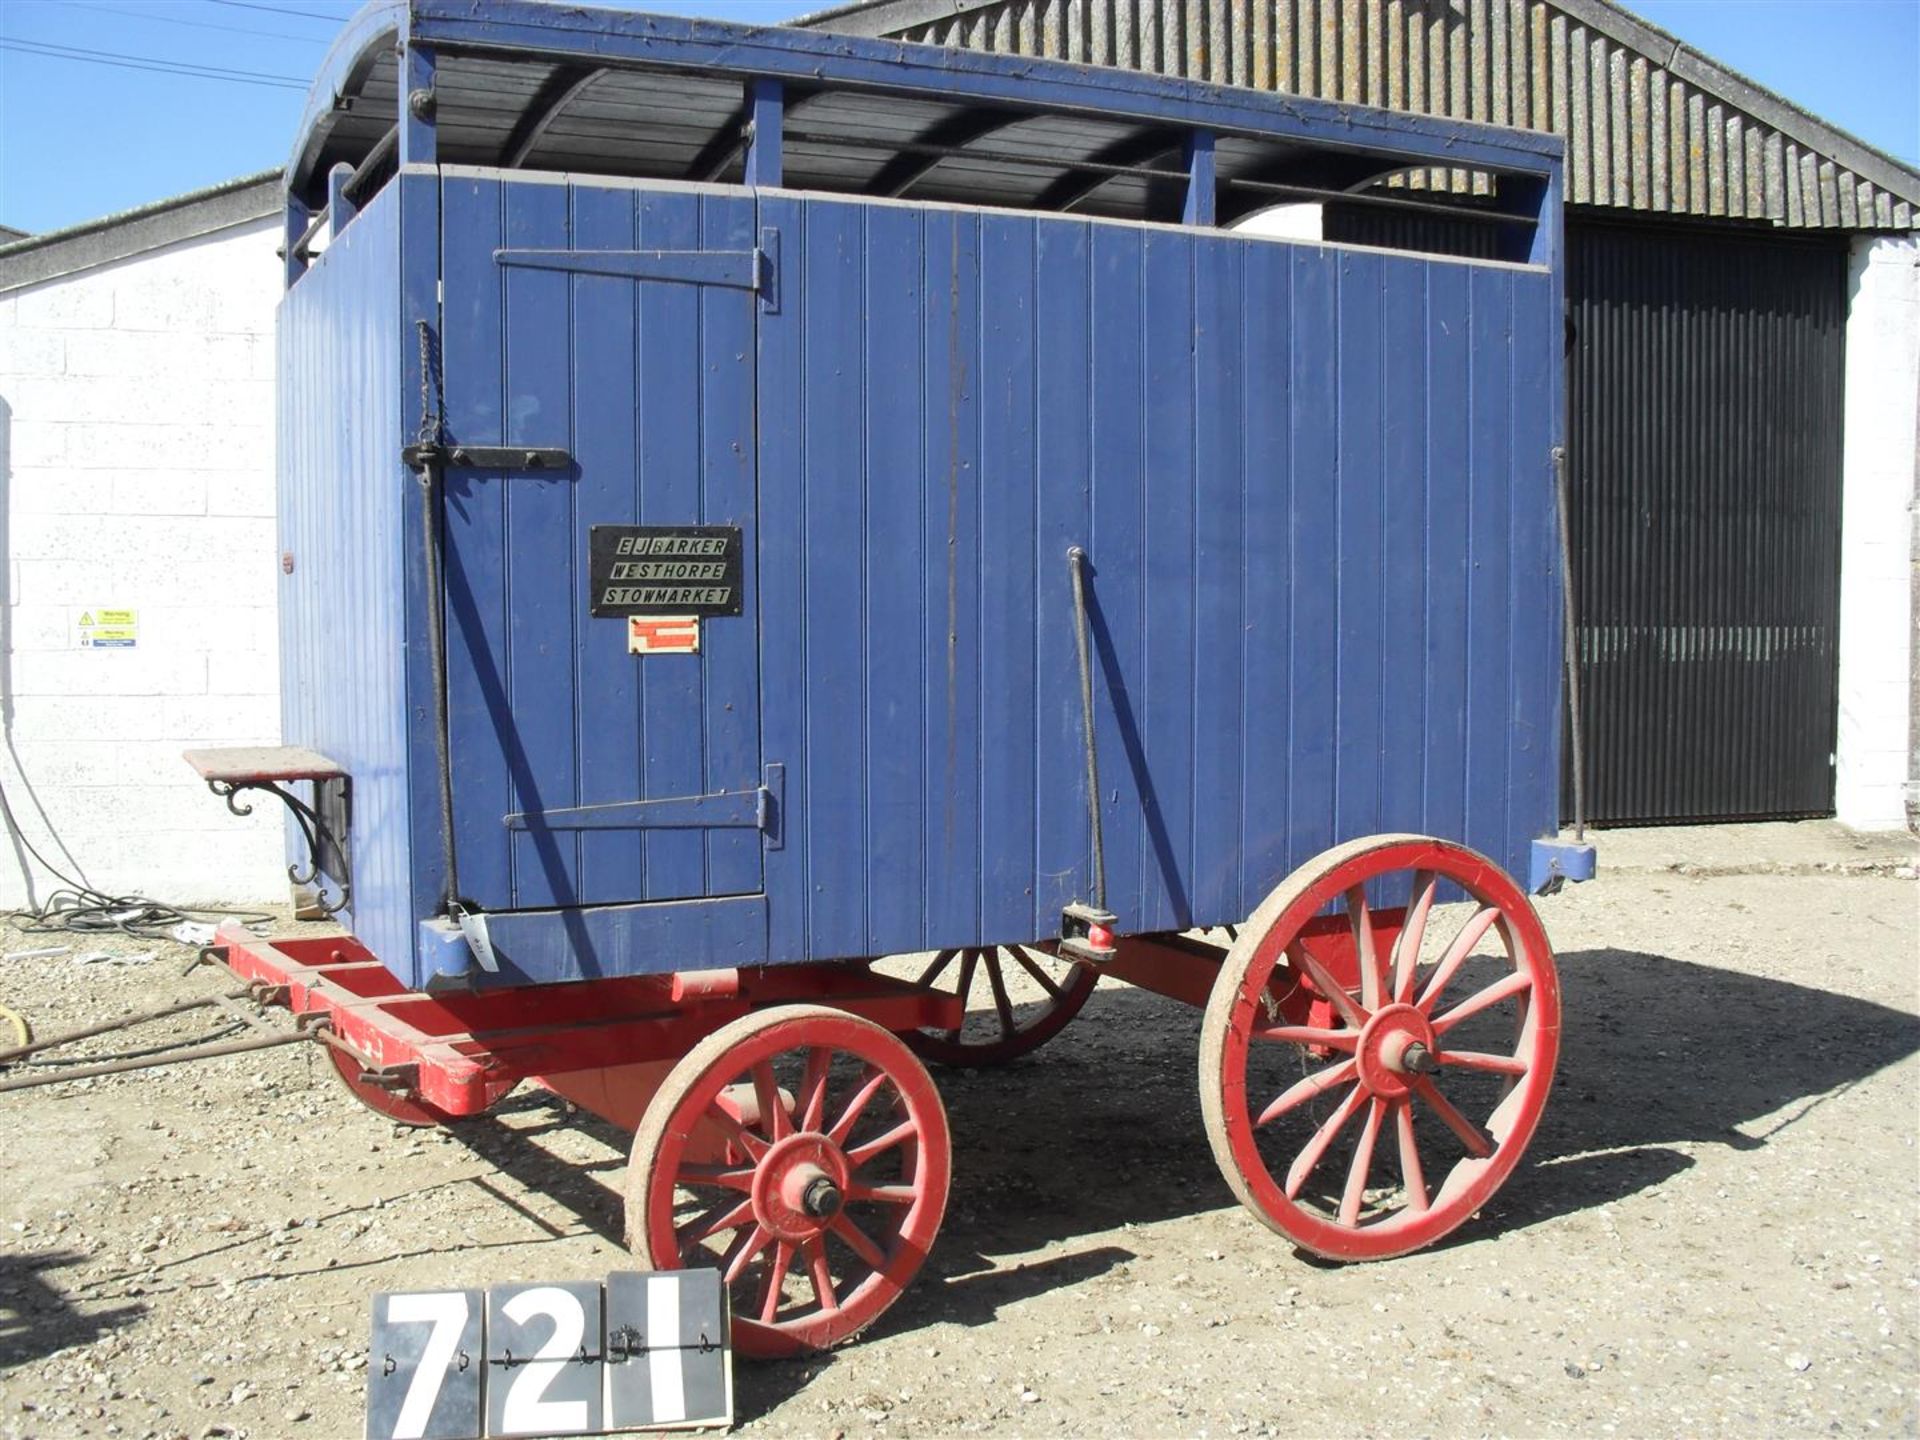 Cornish & Lloyds horse drawn 4wheel wooden livestock transporter on wooden wheels, with side &